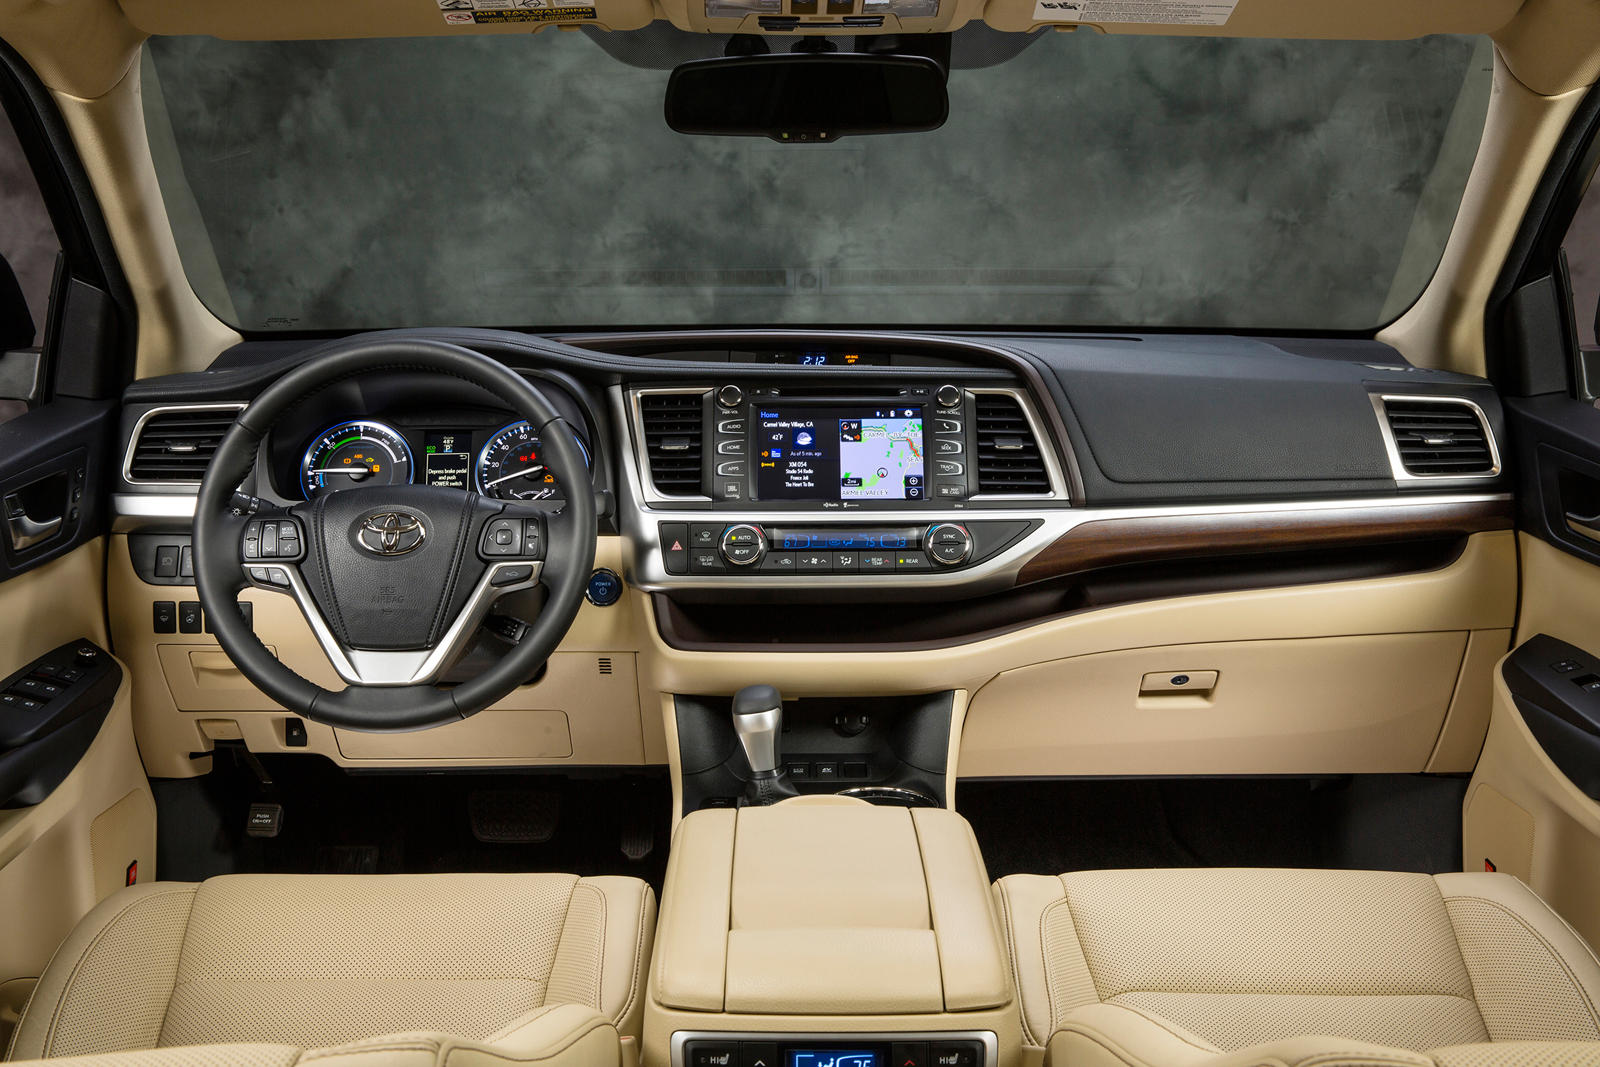 2014 Toyota Highlander Hybrid Interior Photos | CarBuzz